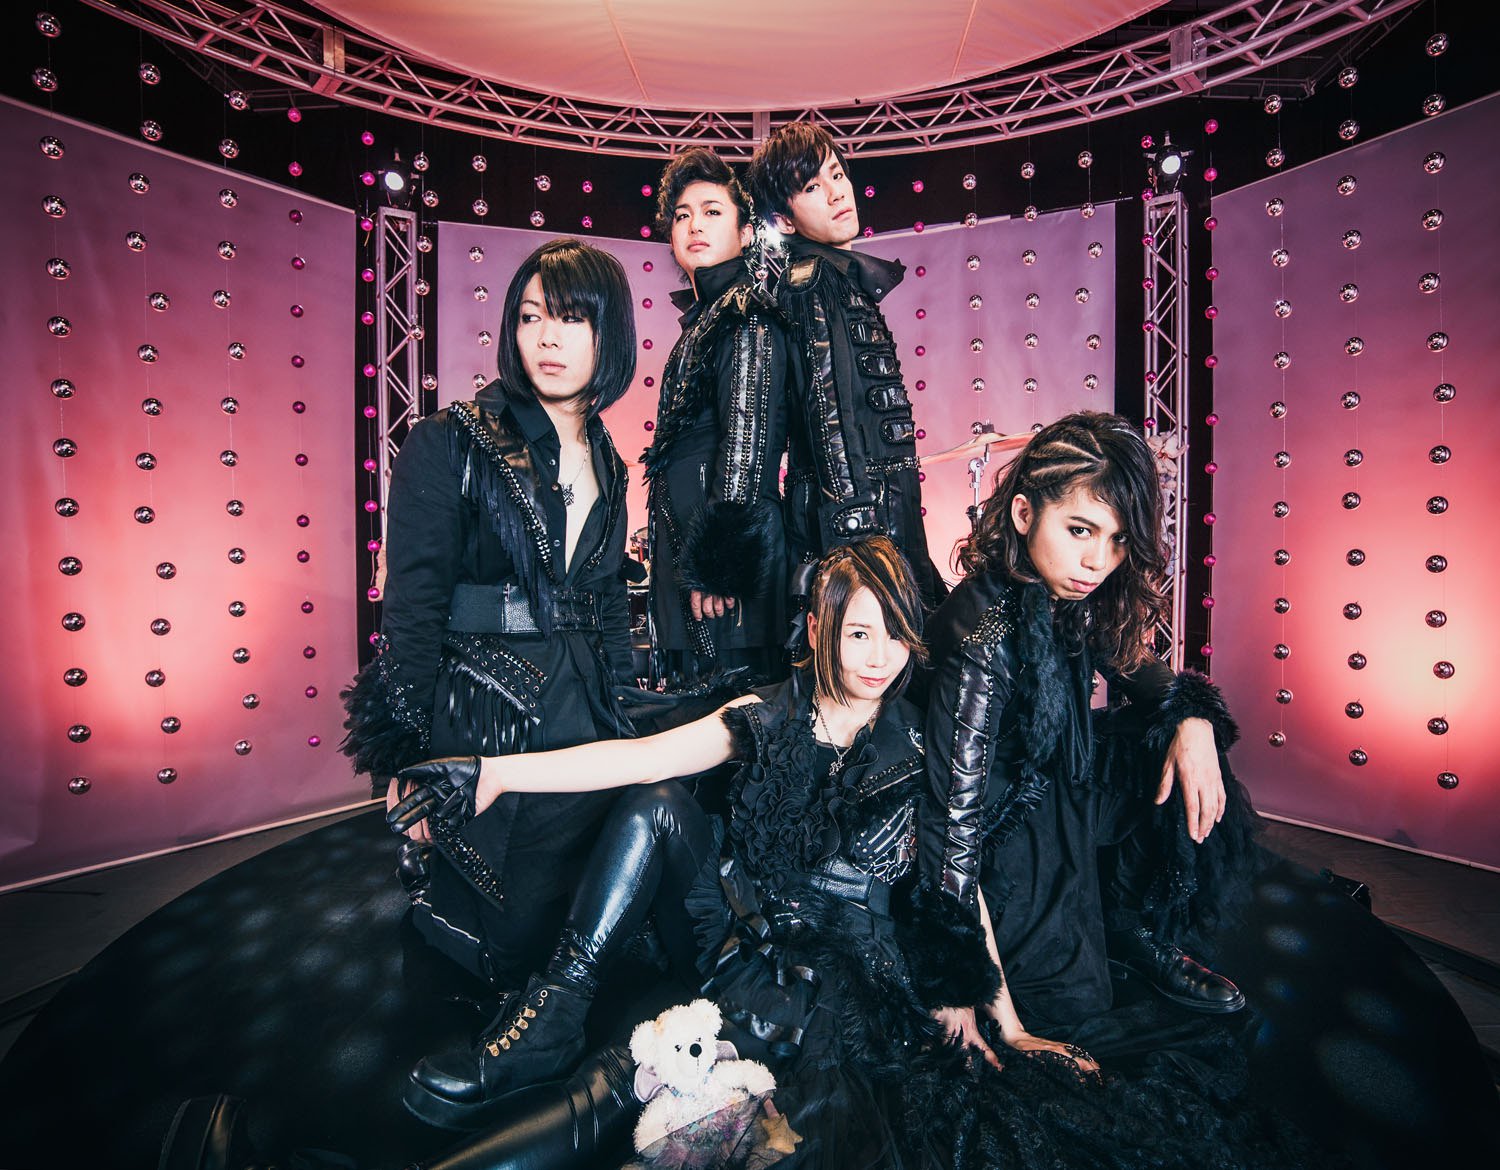 Oomori Seiko and The Pink Tokarev Releases MV for “hayatochiri” from Their Upcoming Album “Tokarev”